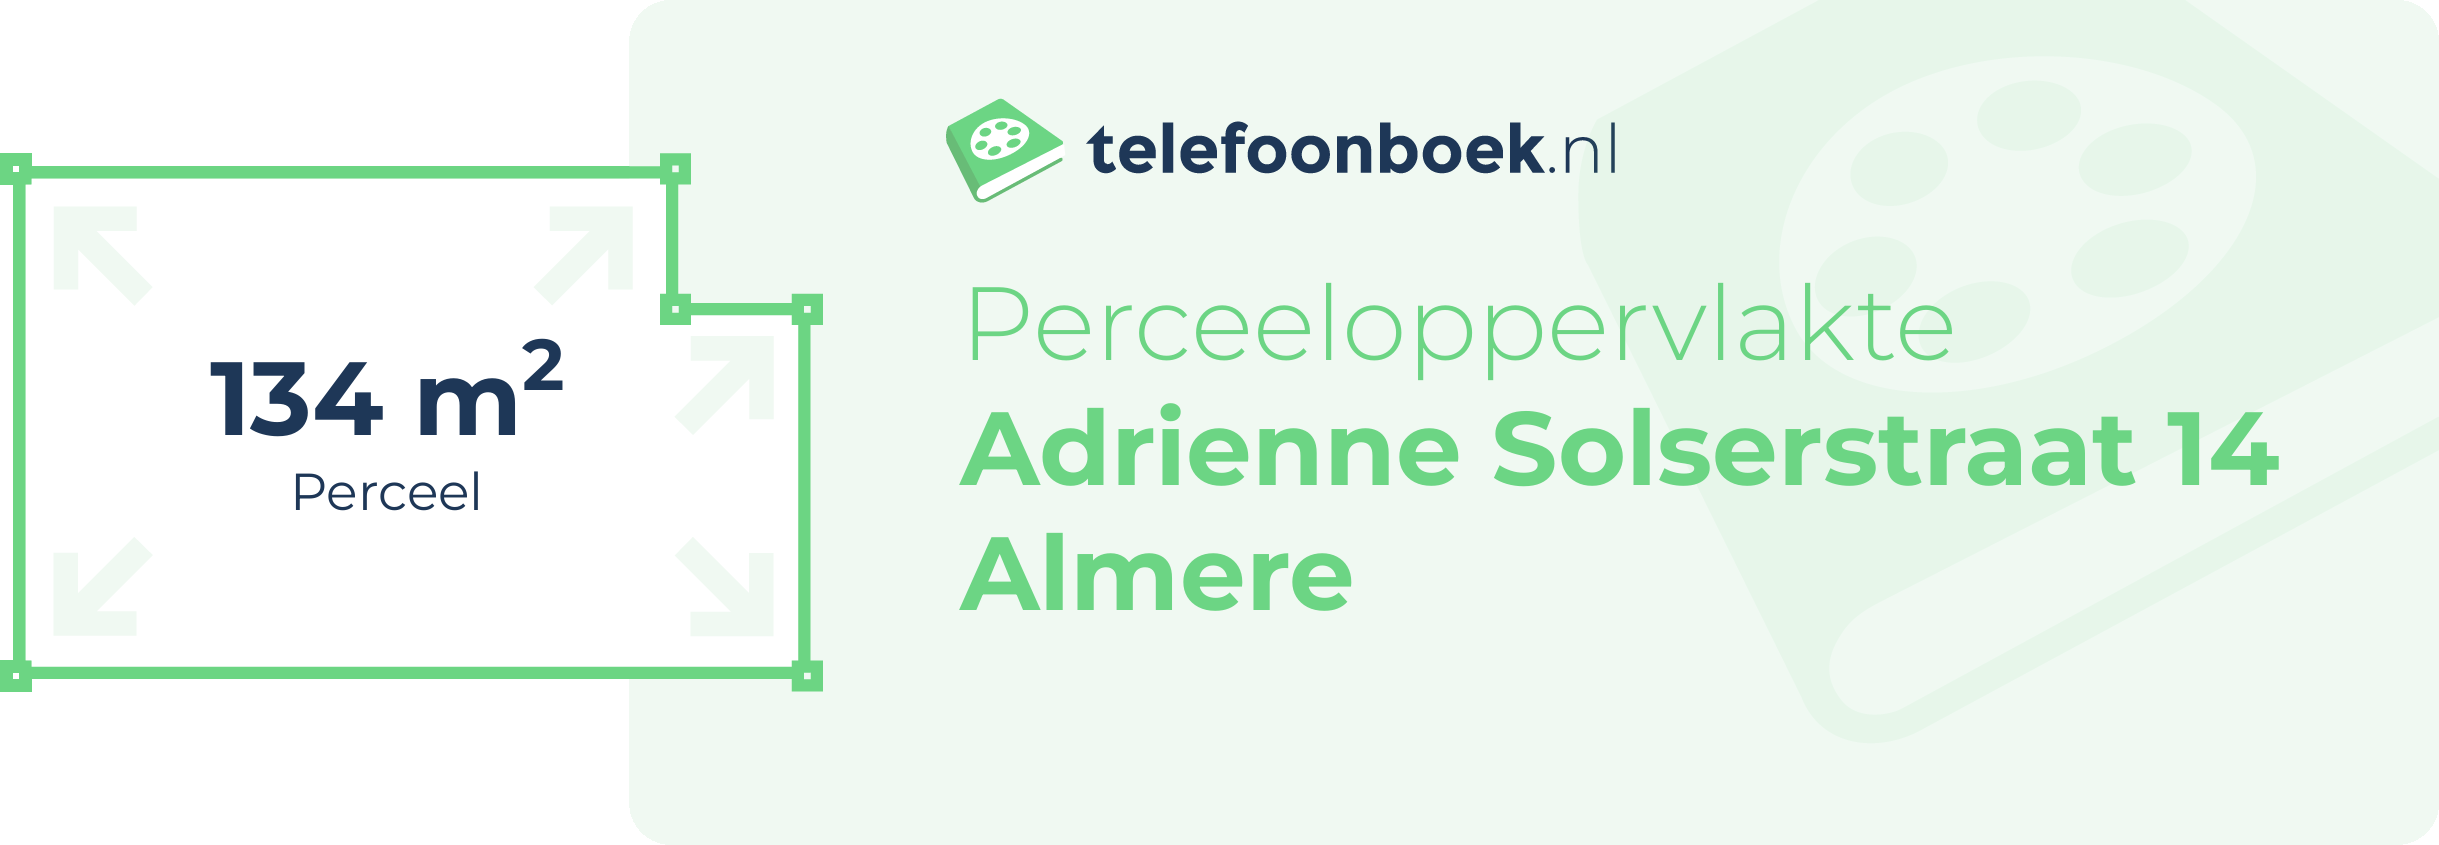 Perceeloppervlakte Adrienne Solserstraat 14 Almere